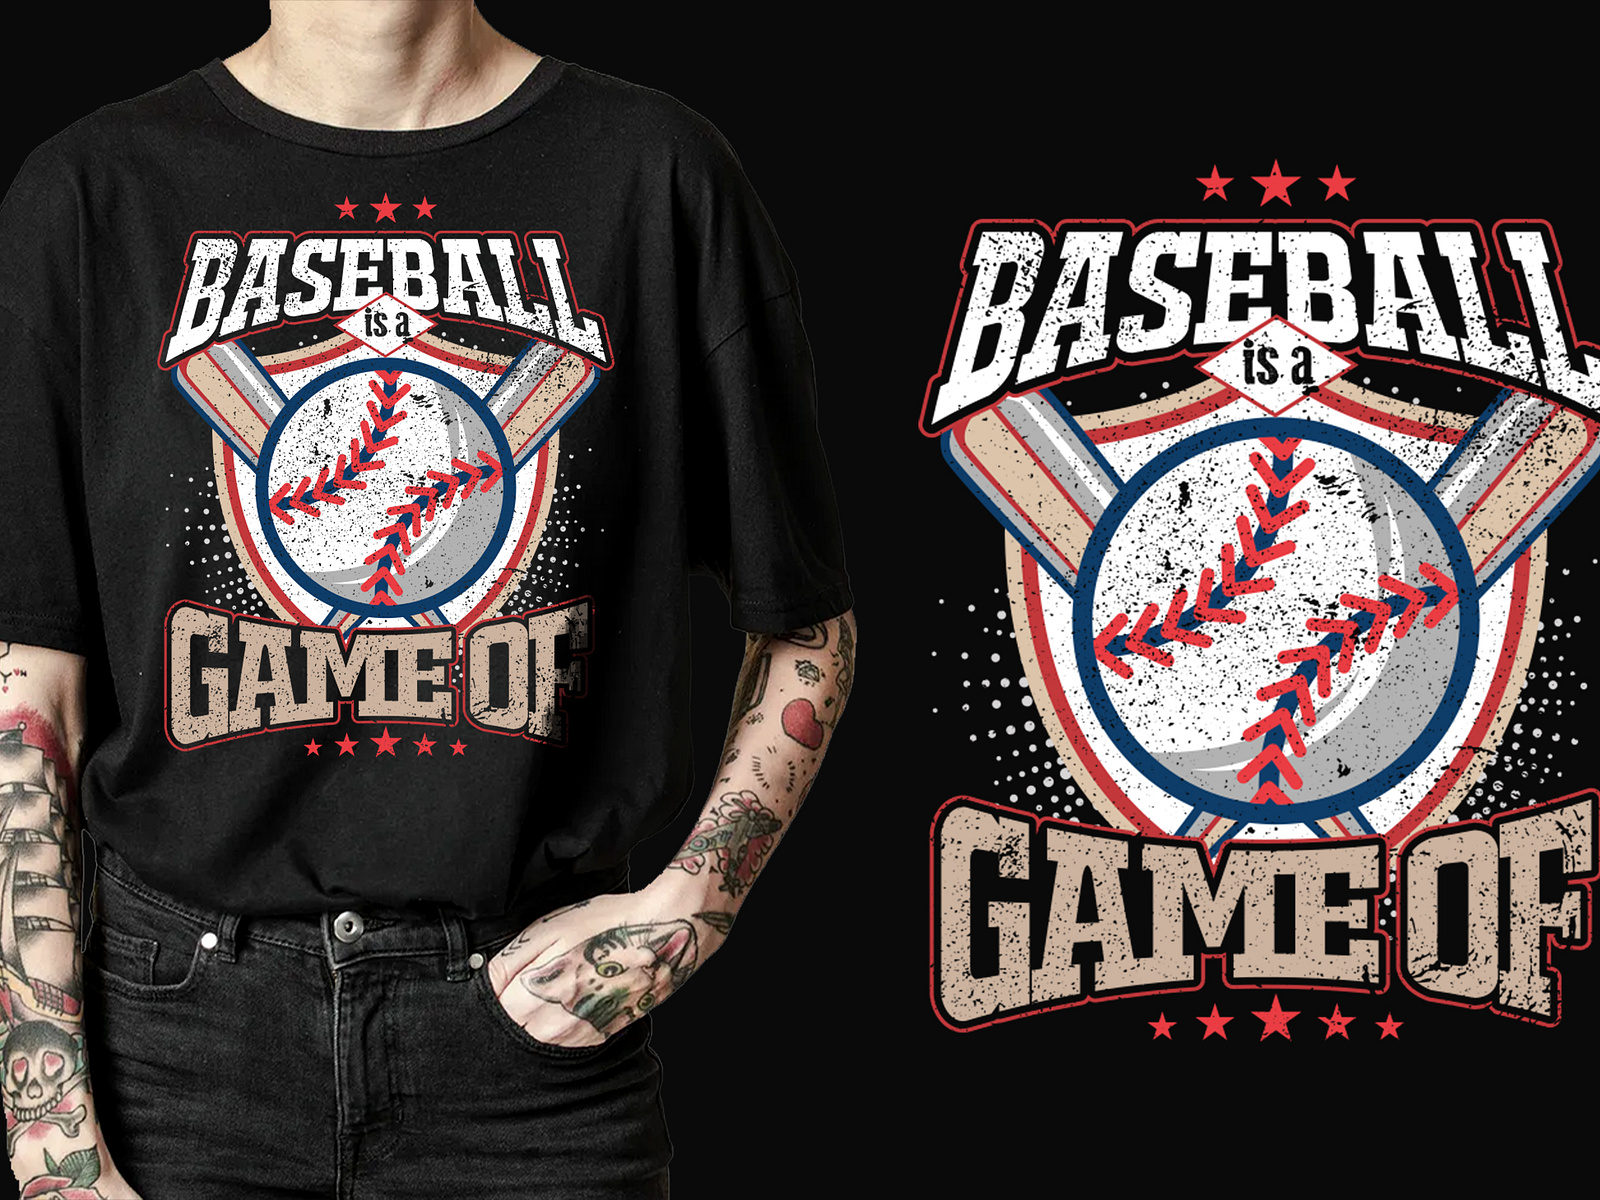 USA baseball t-shirt design vector by khalid | T-shirt Designer on Dribbble